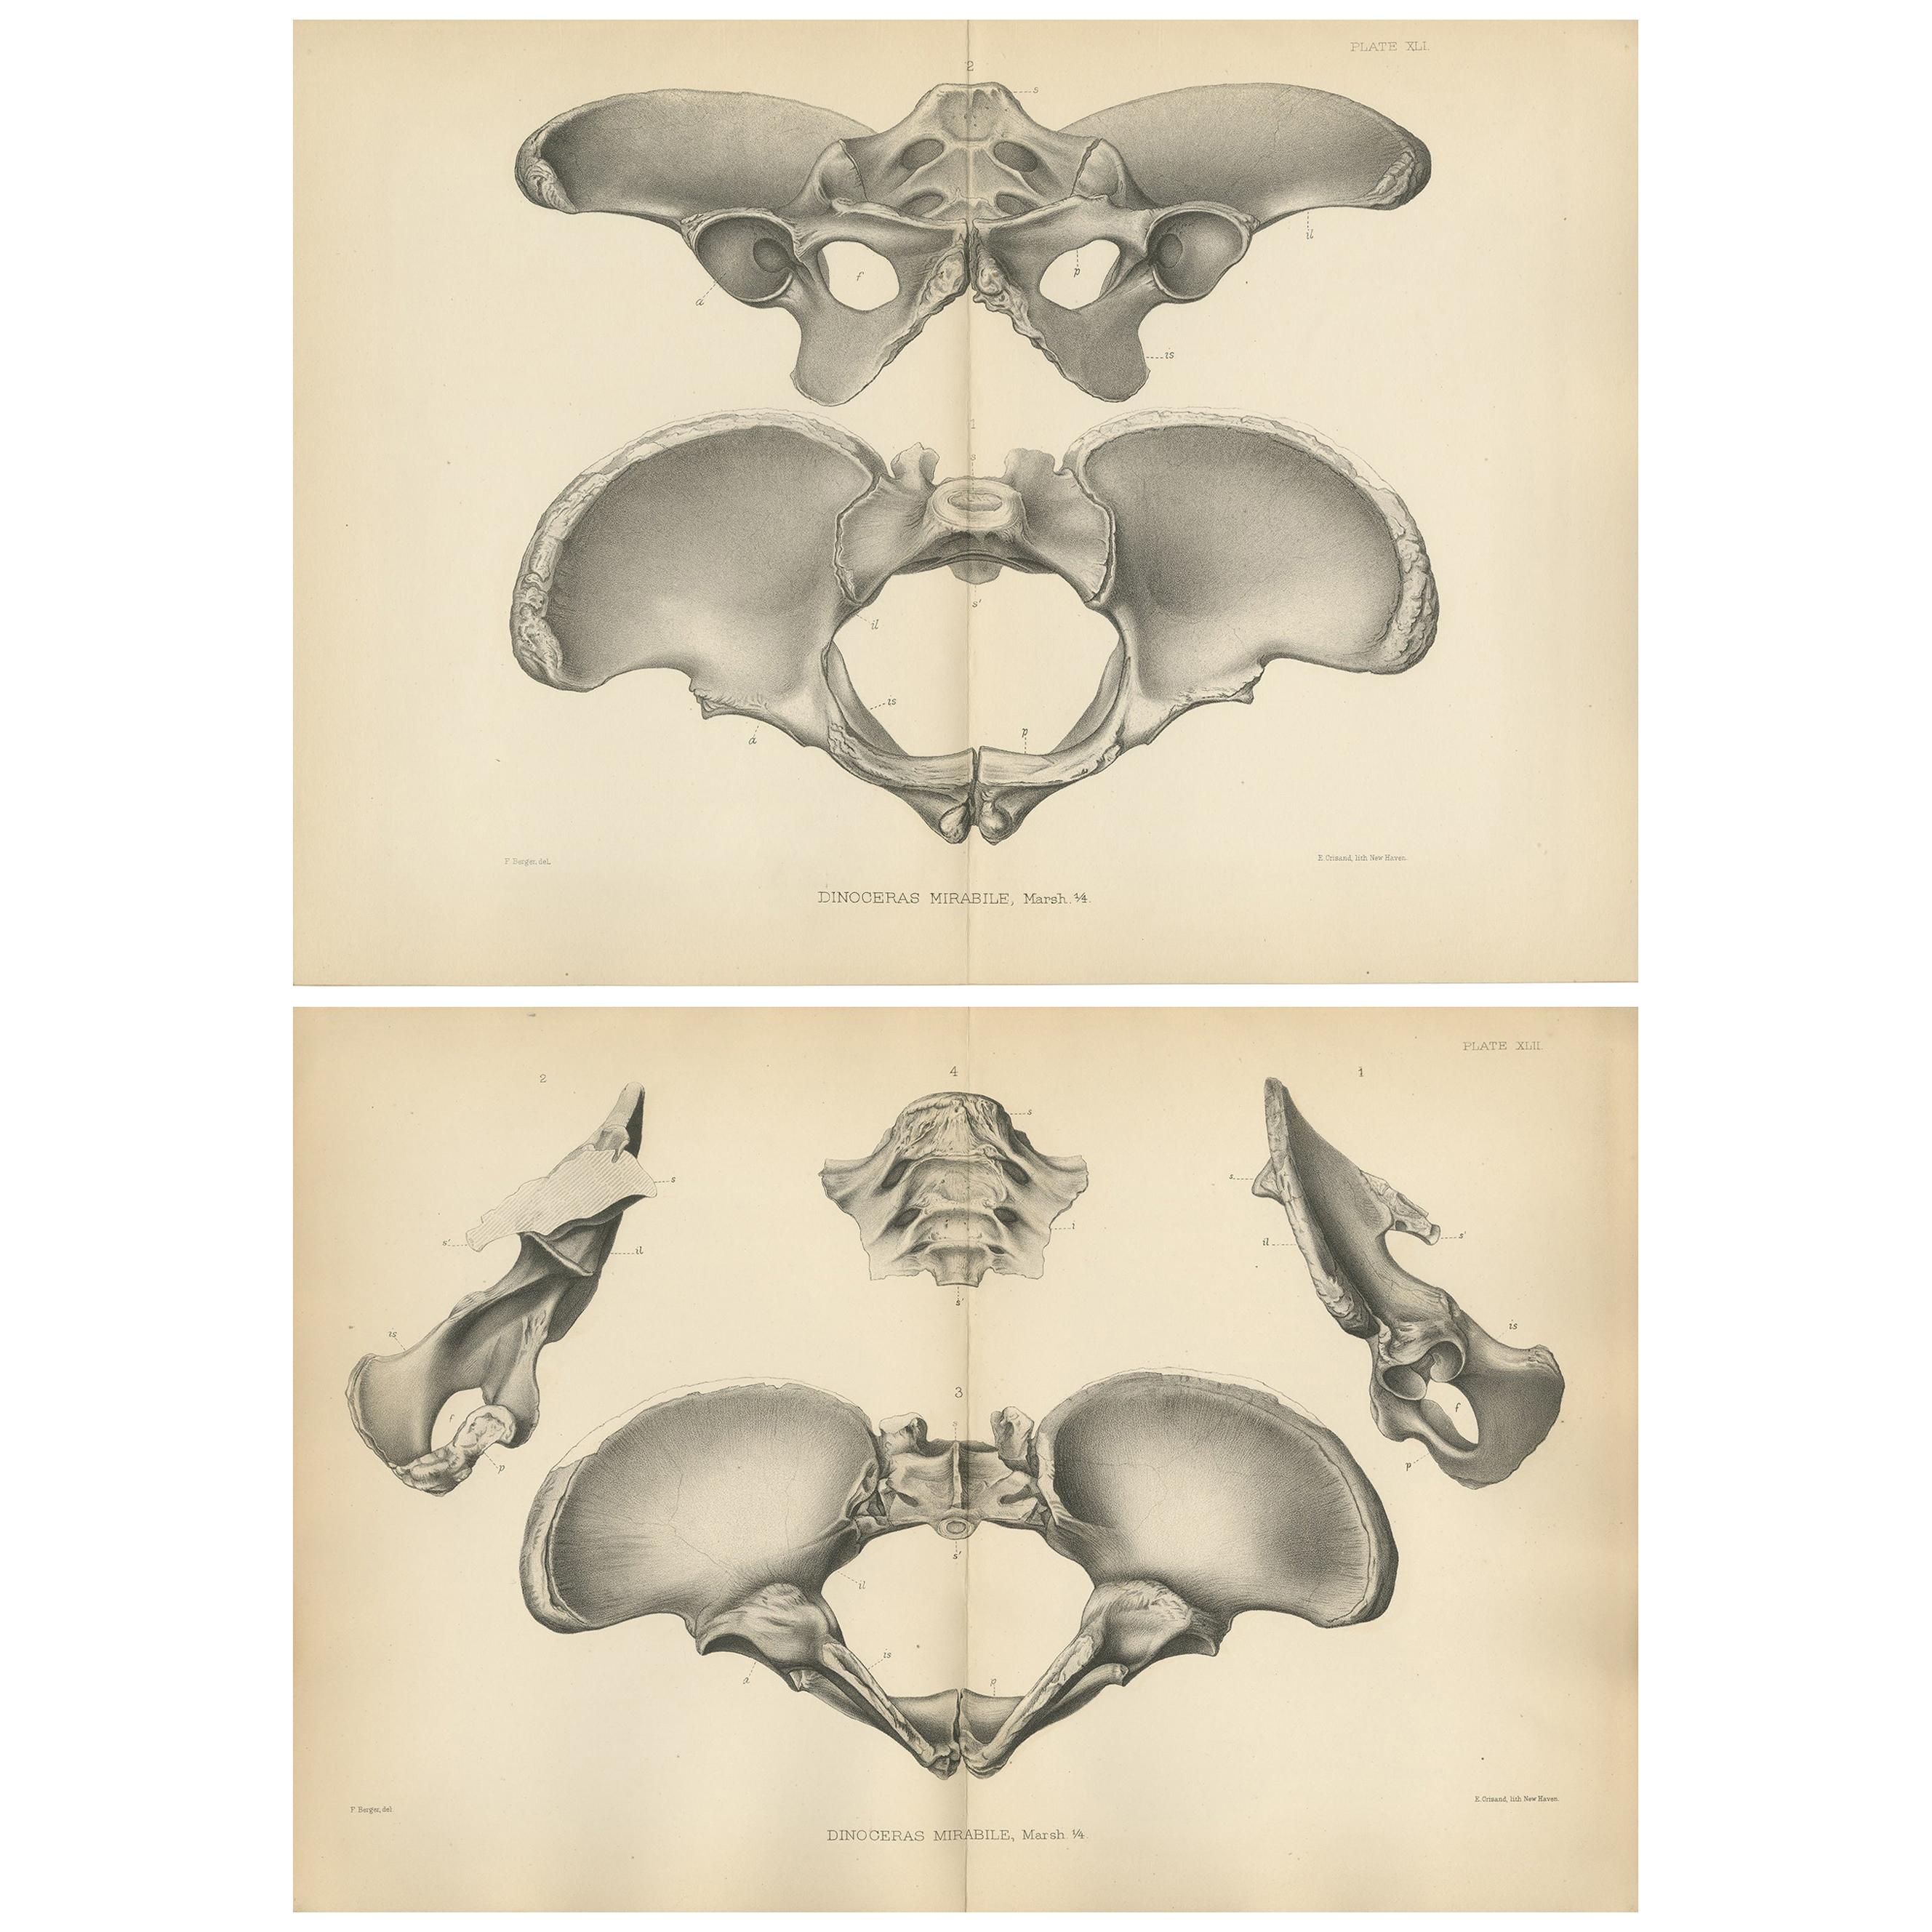 Set of 2 Antique Paleontology Prints of a Dinoceras Mirabile by Marsh, 1886